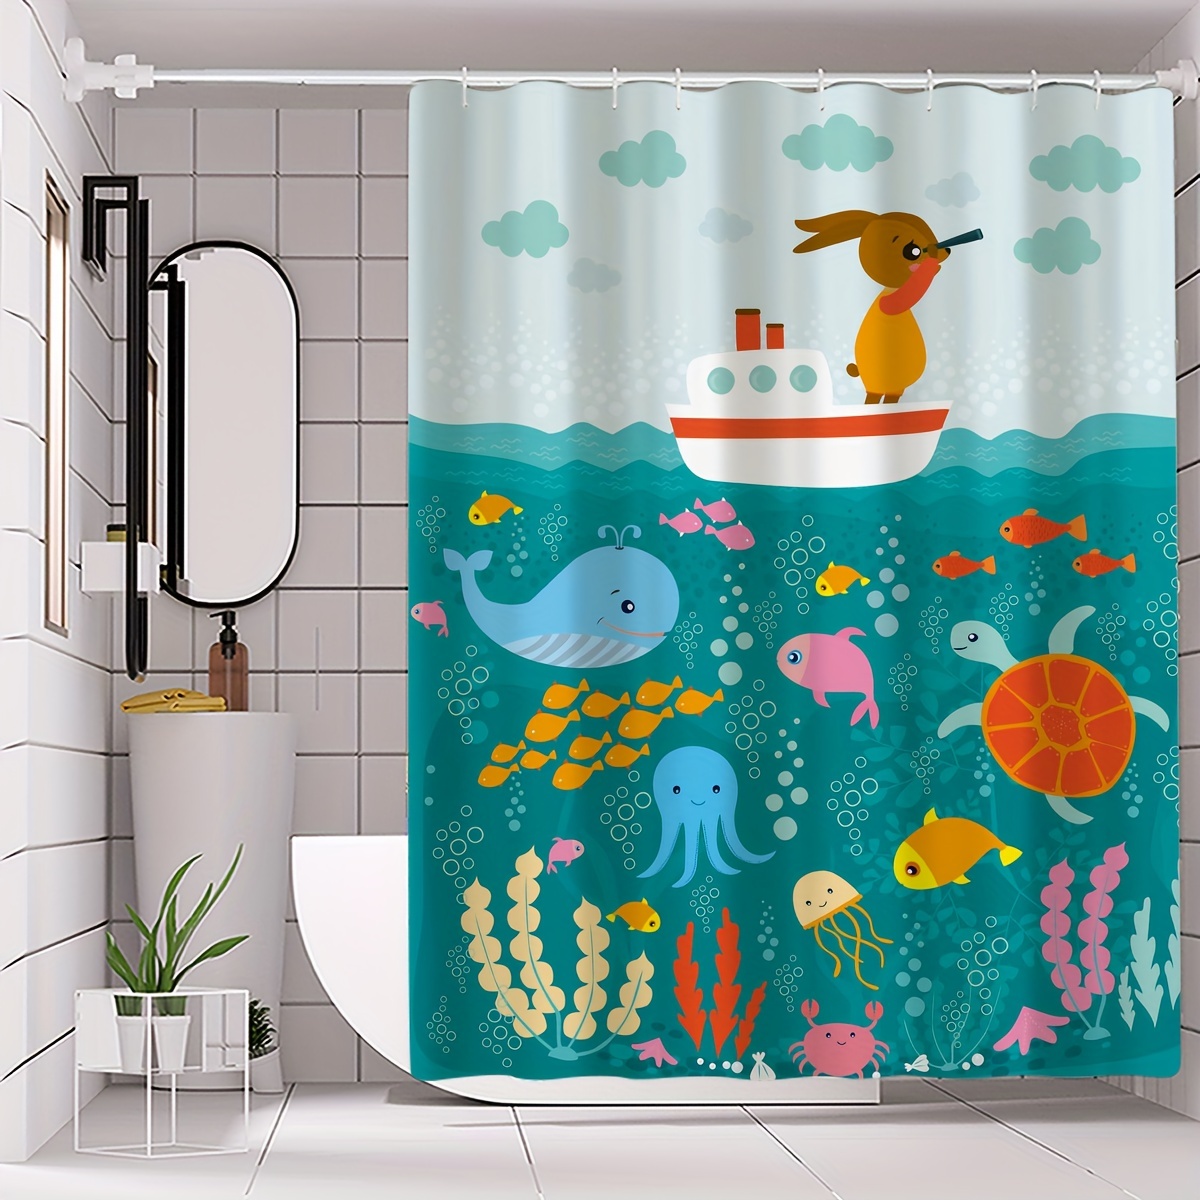 Fabric Shower Curtain with Hooks Modern Minimalist Animal Fox